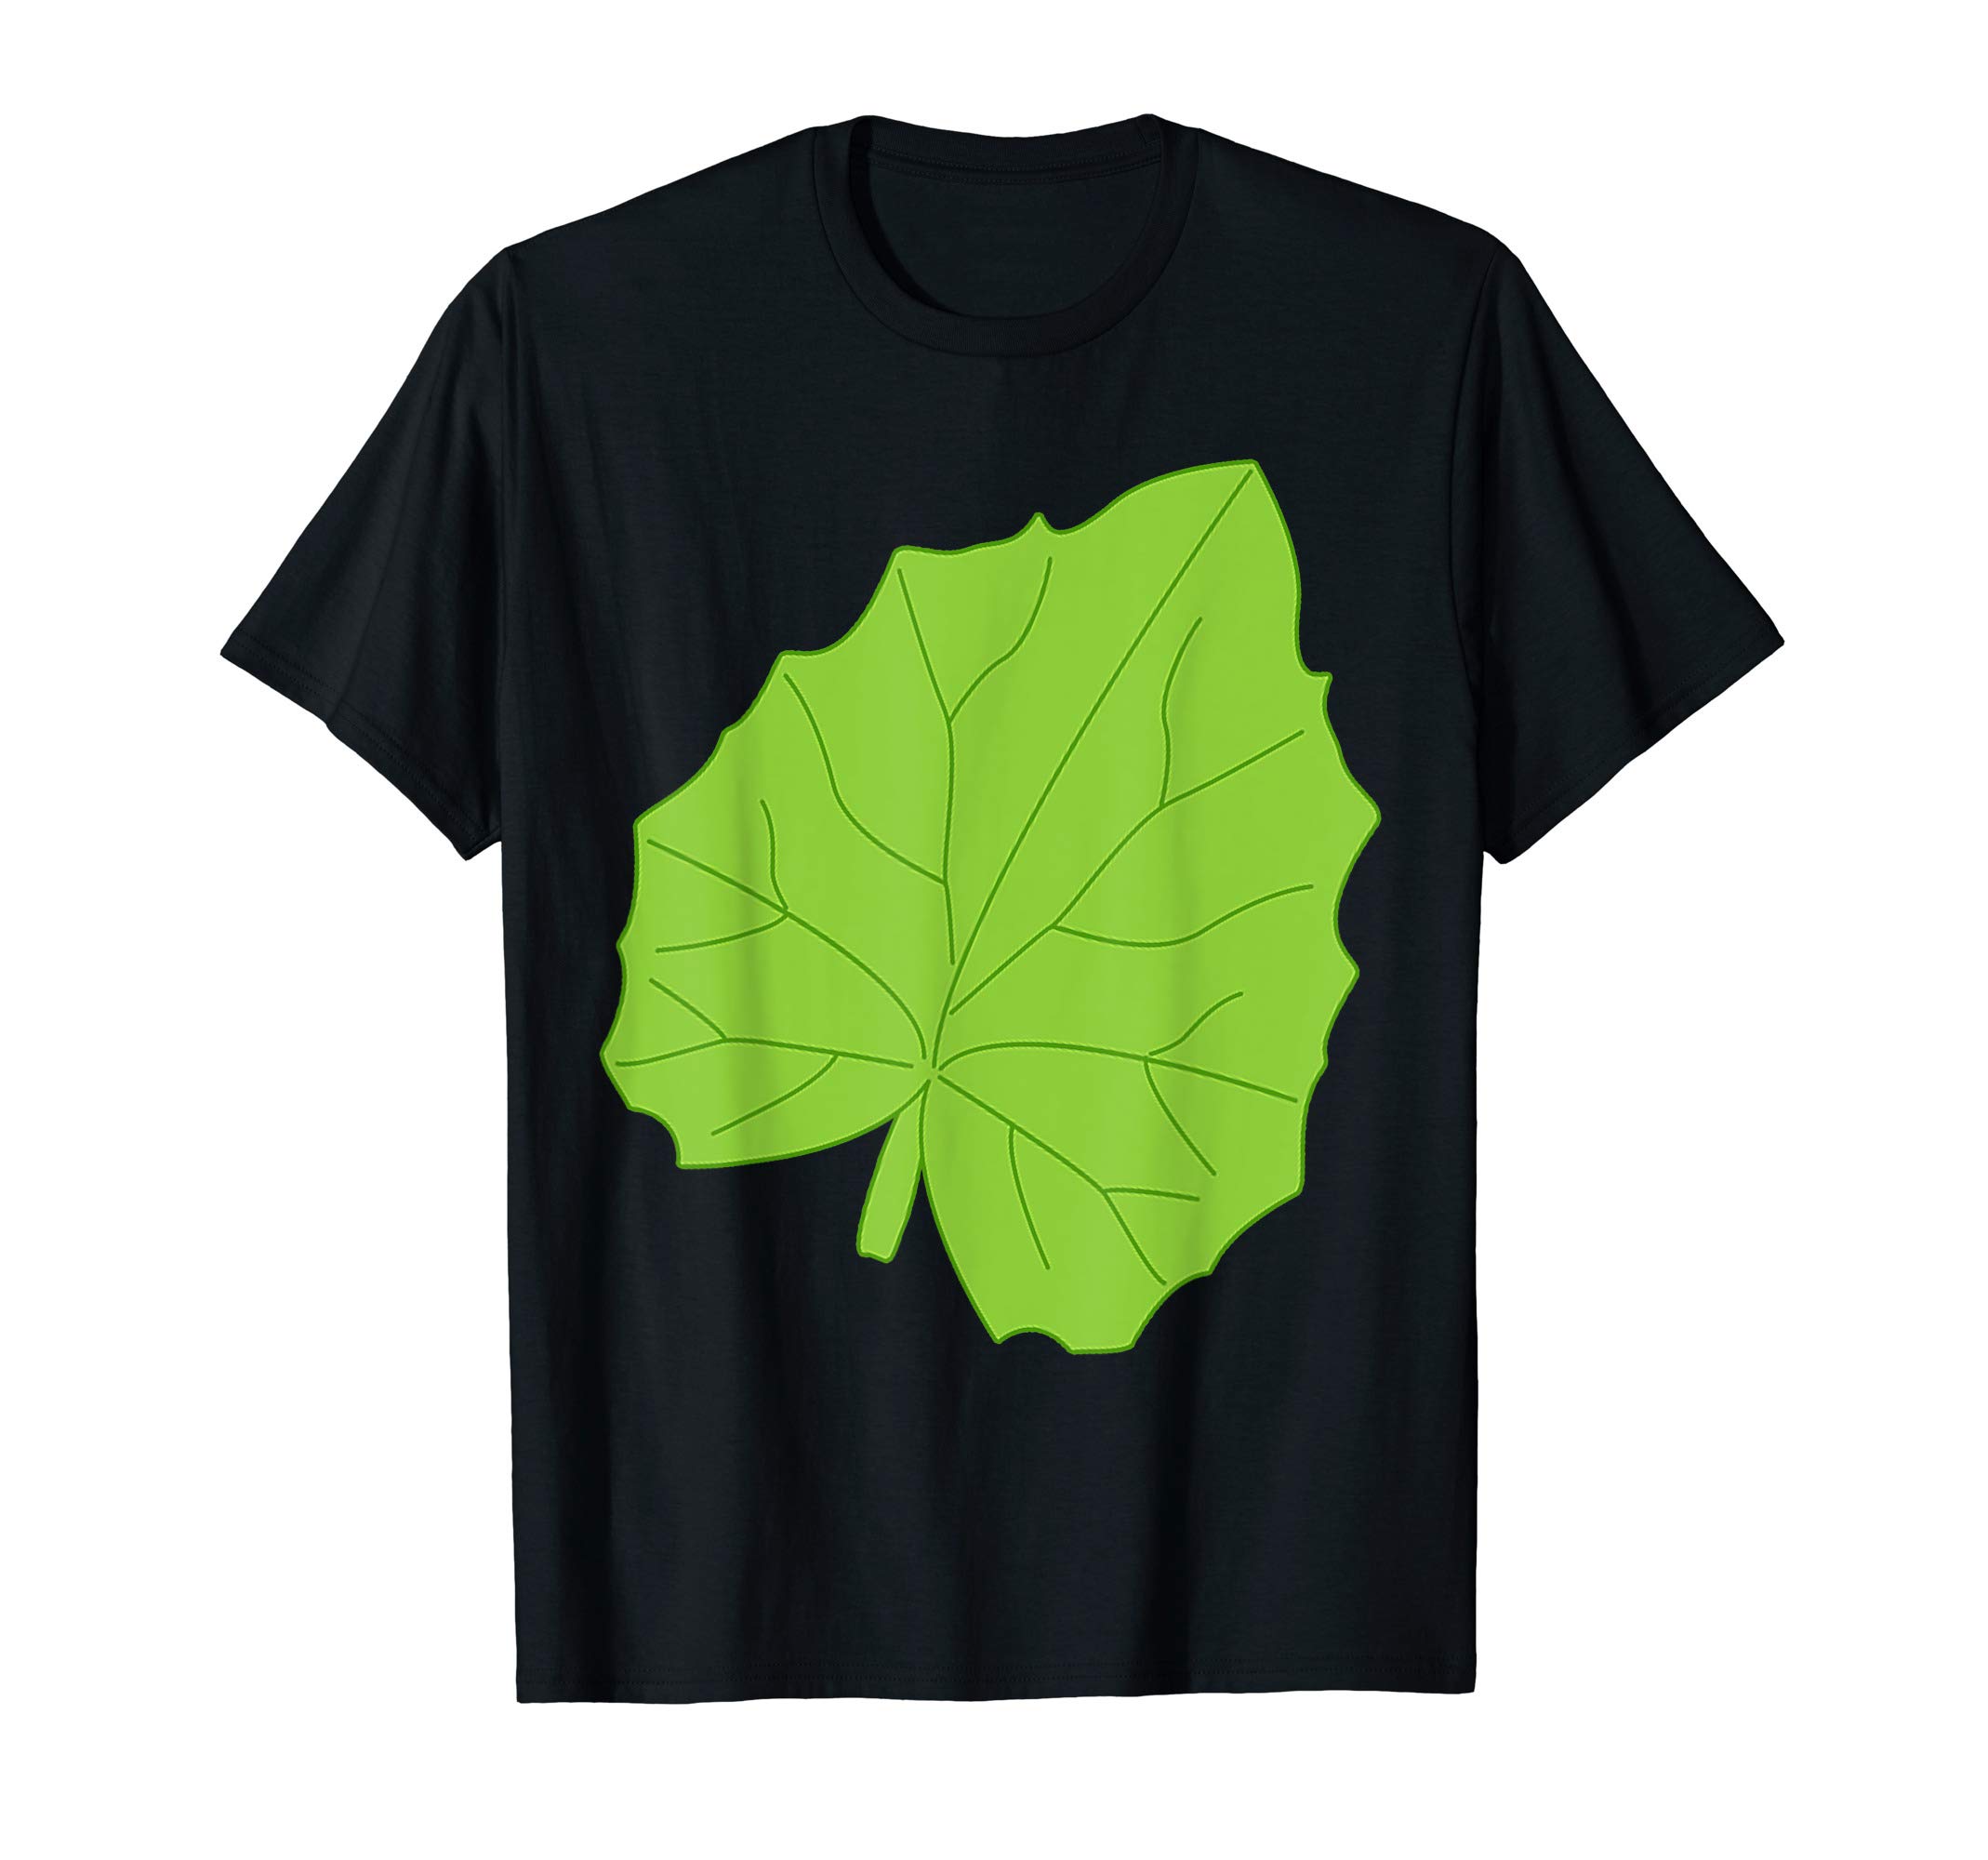 Matching With Caterpillar - Green Leaf Halloween Costume T-Shirt